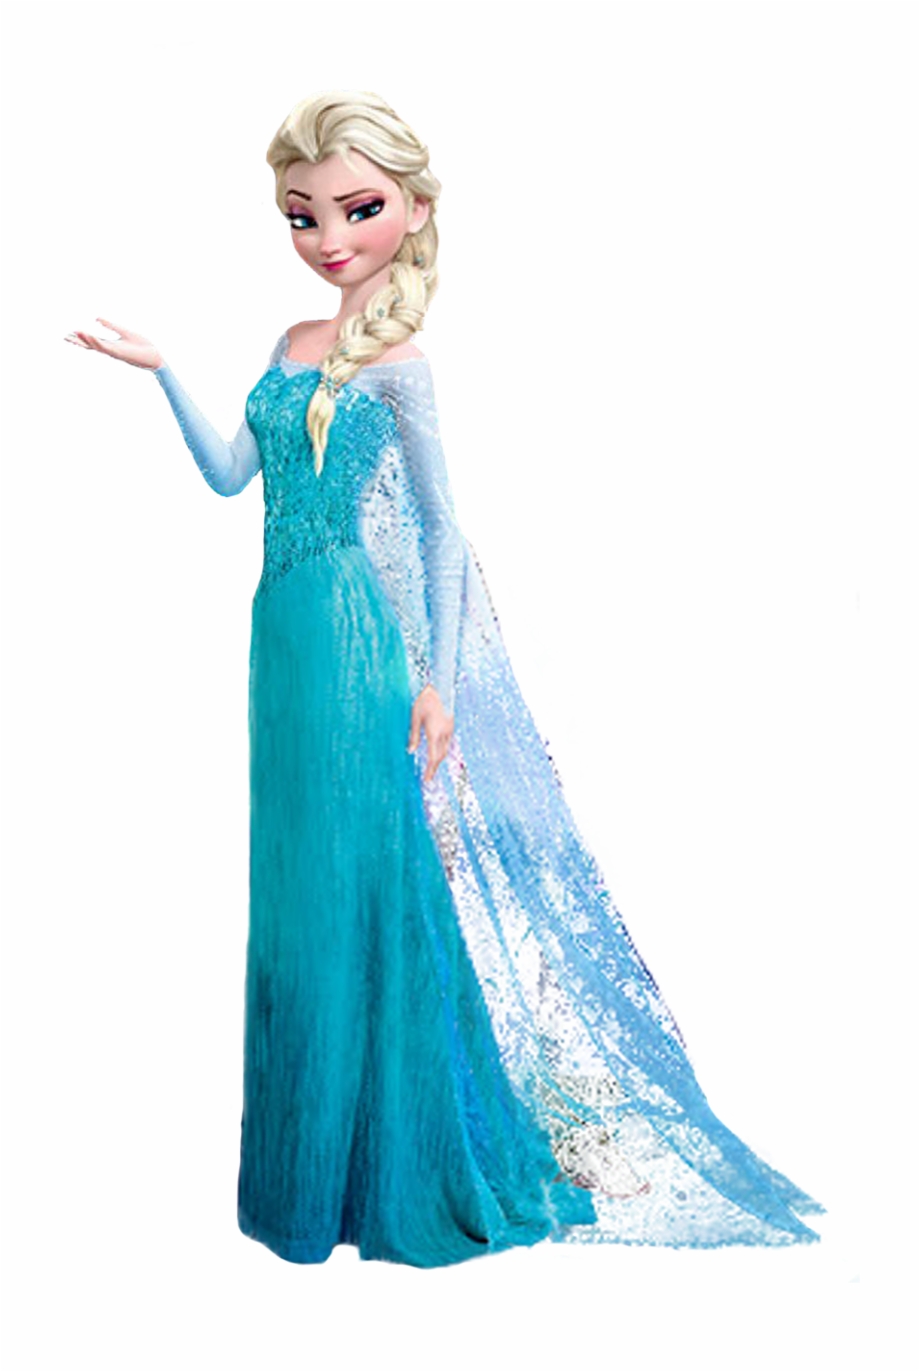 Download Elsa clipart body, Elsa body Transparent FREE for download ...